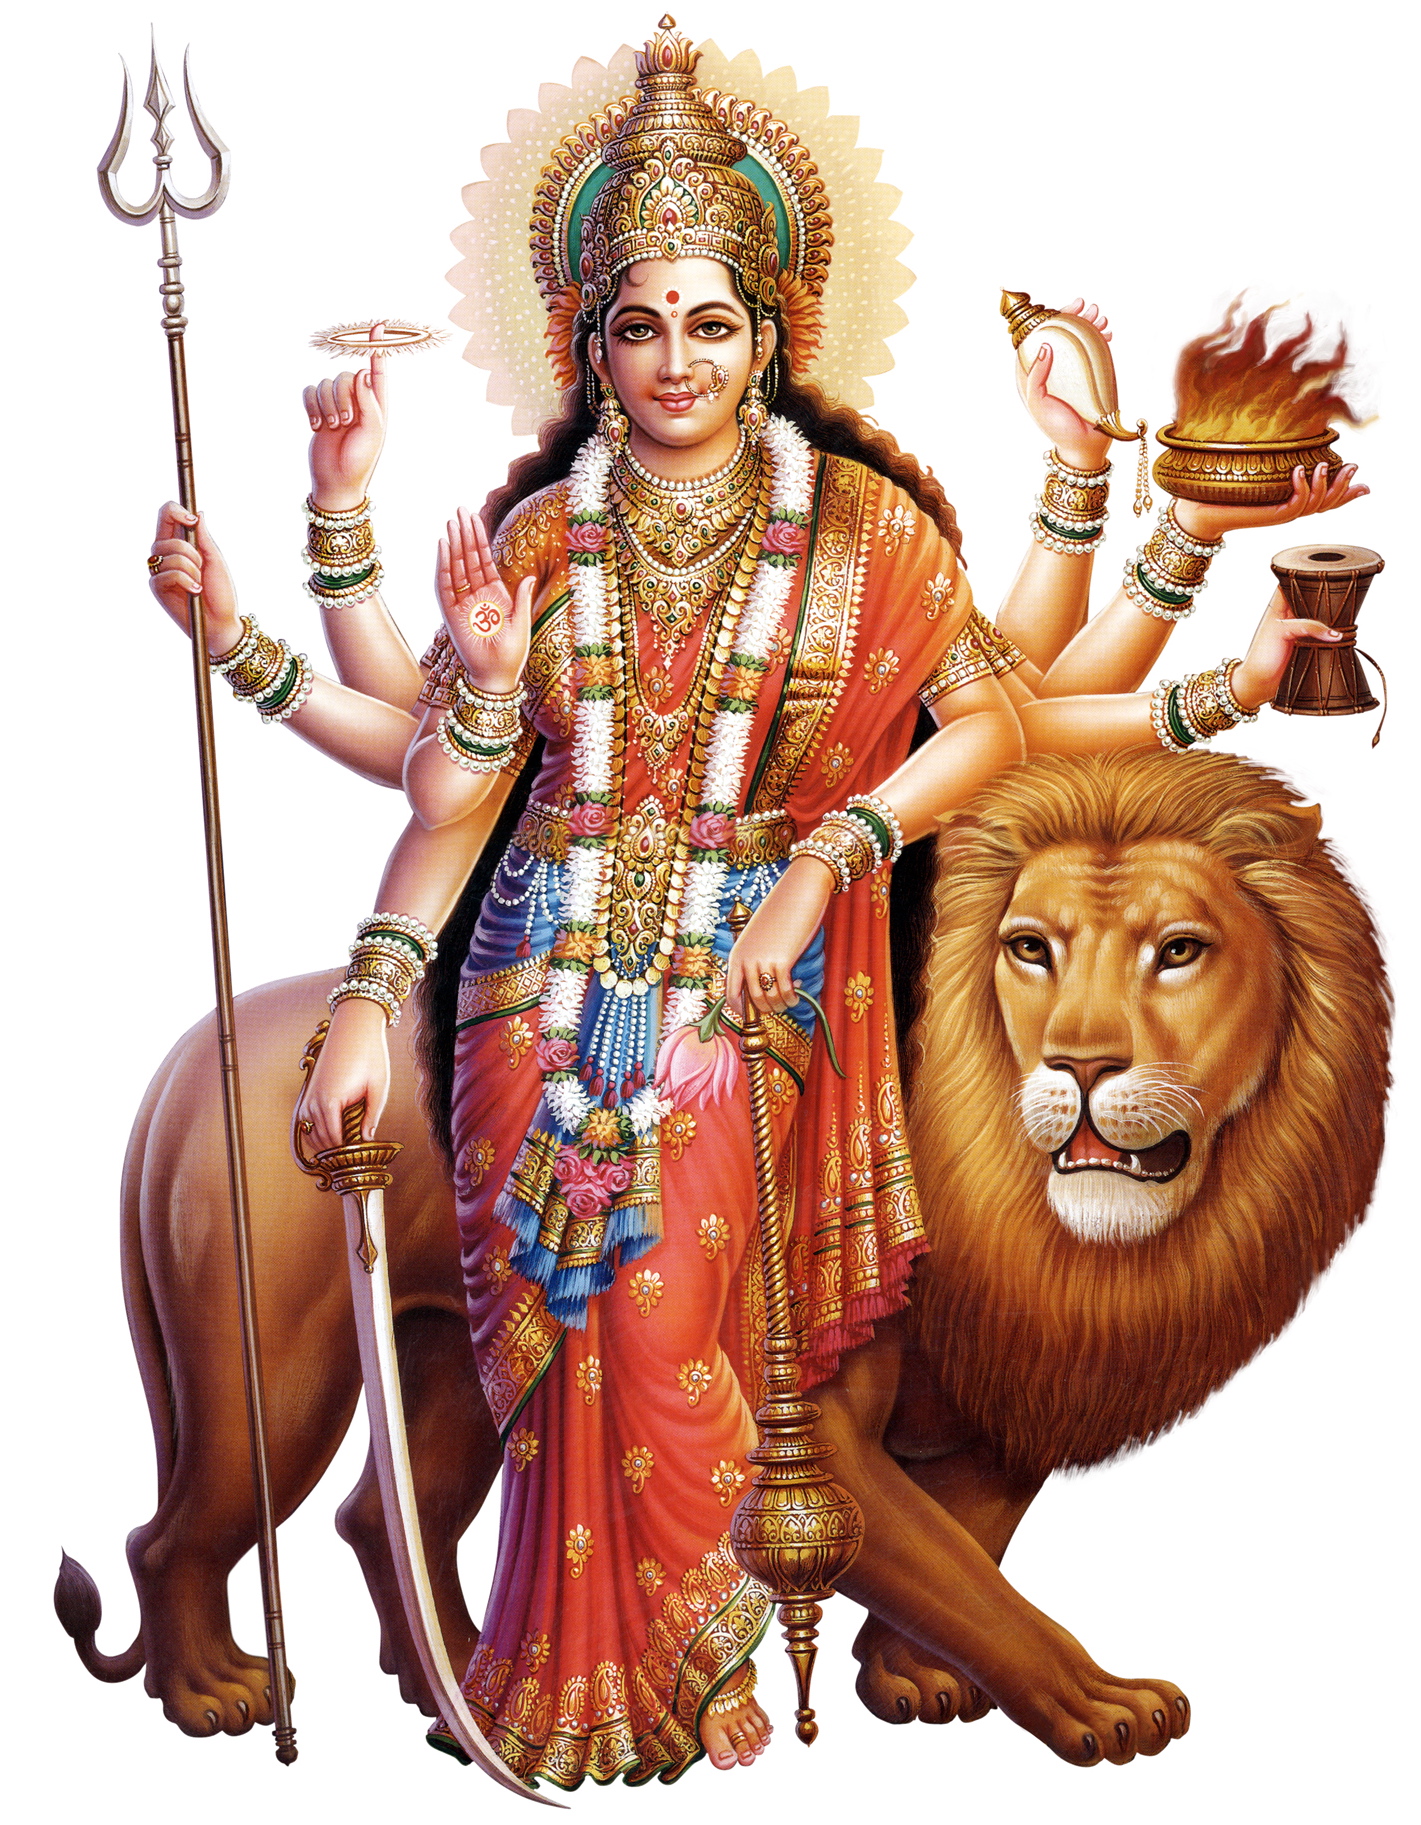 Durgamata, the goddess of cre